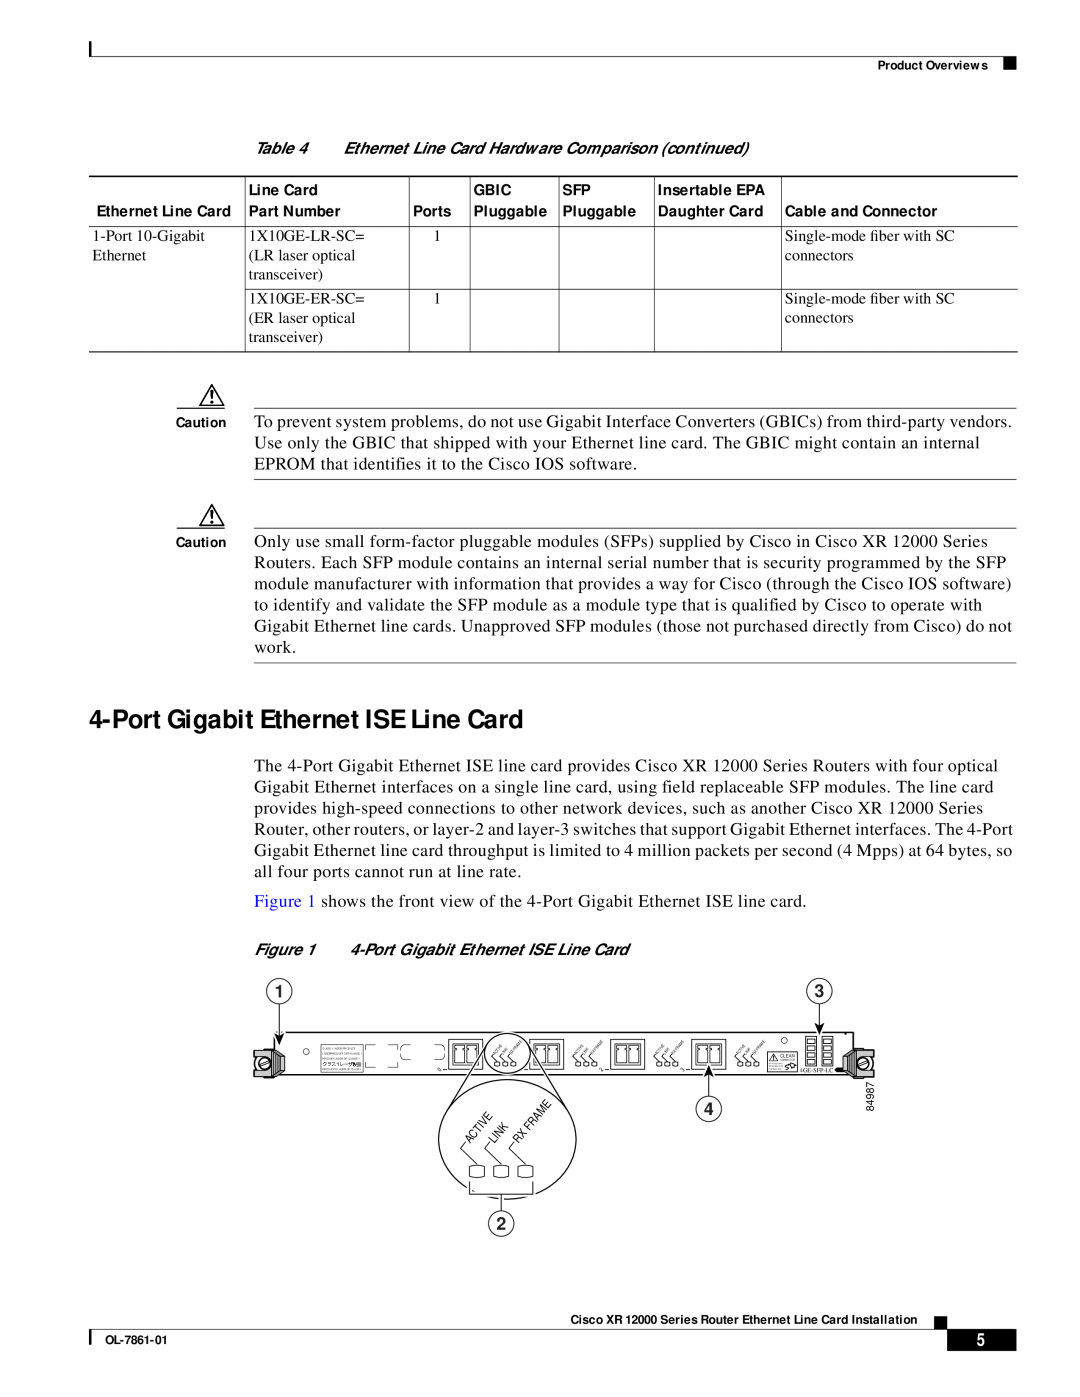 Cisco Systems OL-7861-01 manual Port Gigabit Ethernet ISE Line Card, Ethernet Line Card Hardware Comparison continued 